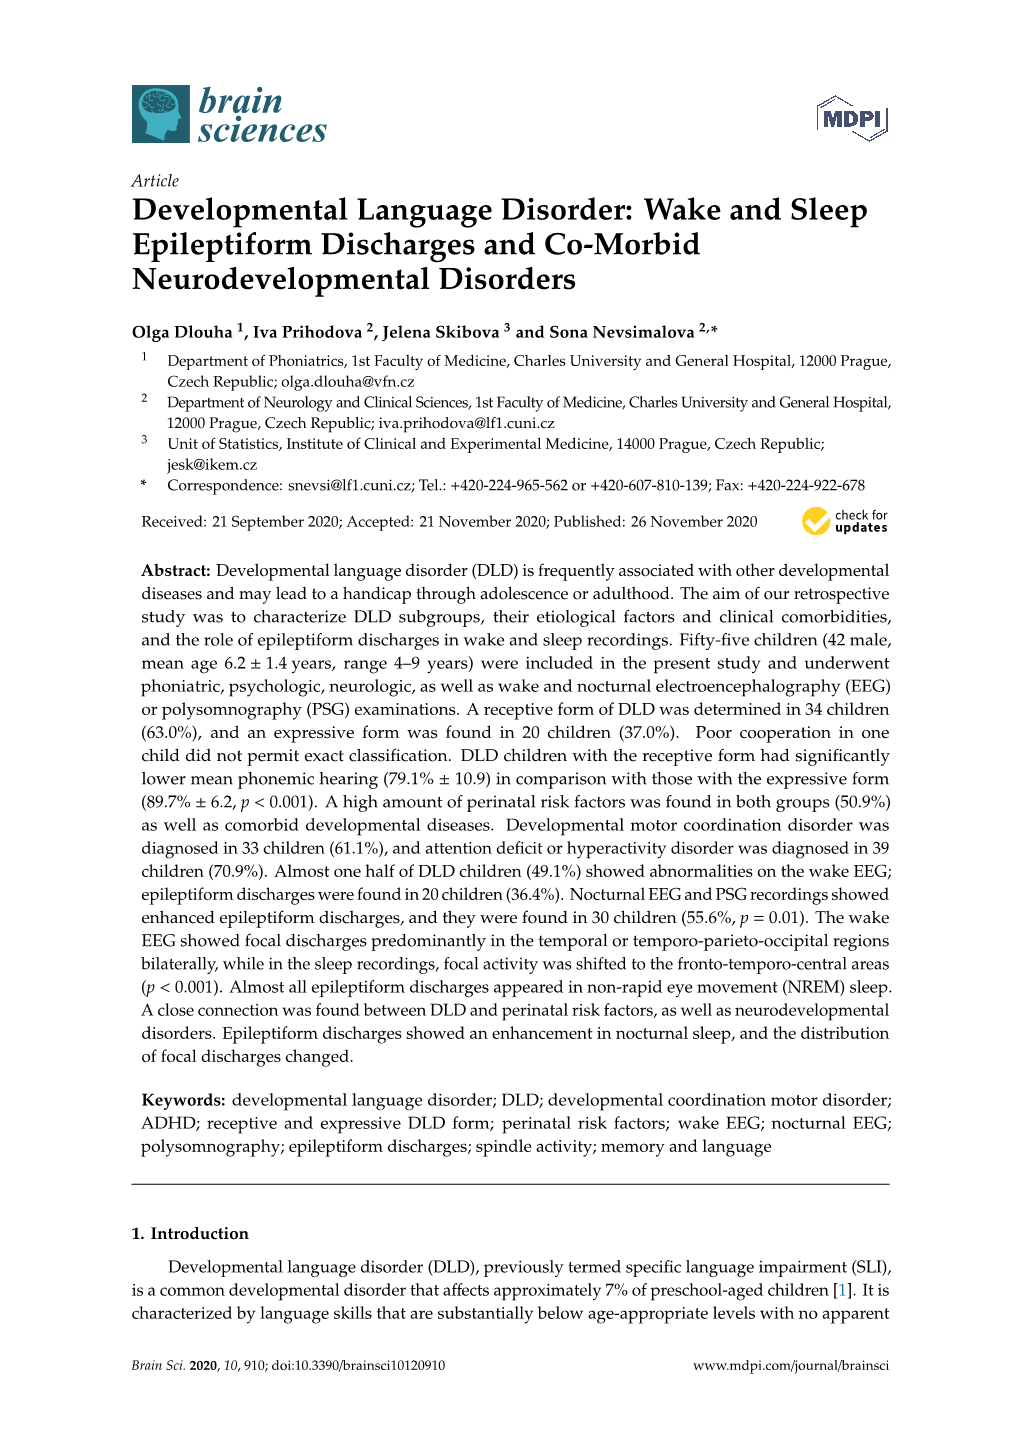 Developmental Language Disorder: Wake and Sleep Epileptiform Discharges and Co-Morbid Neurodevelopmental Disorders